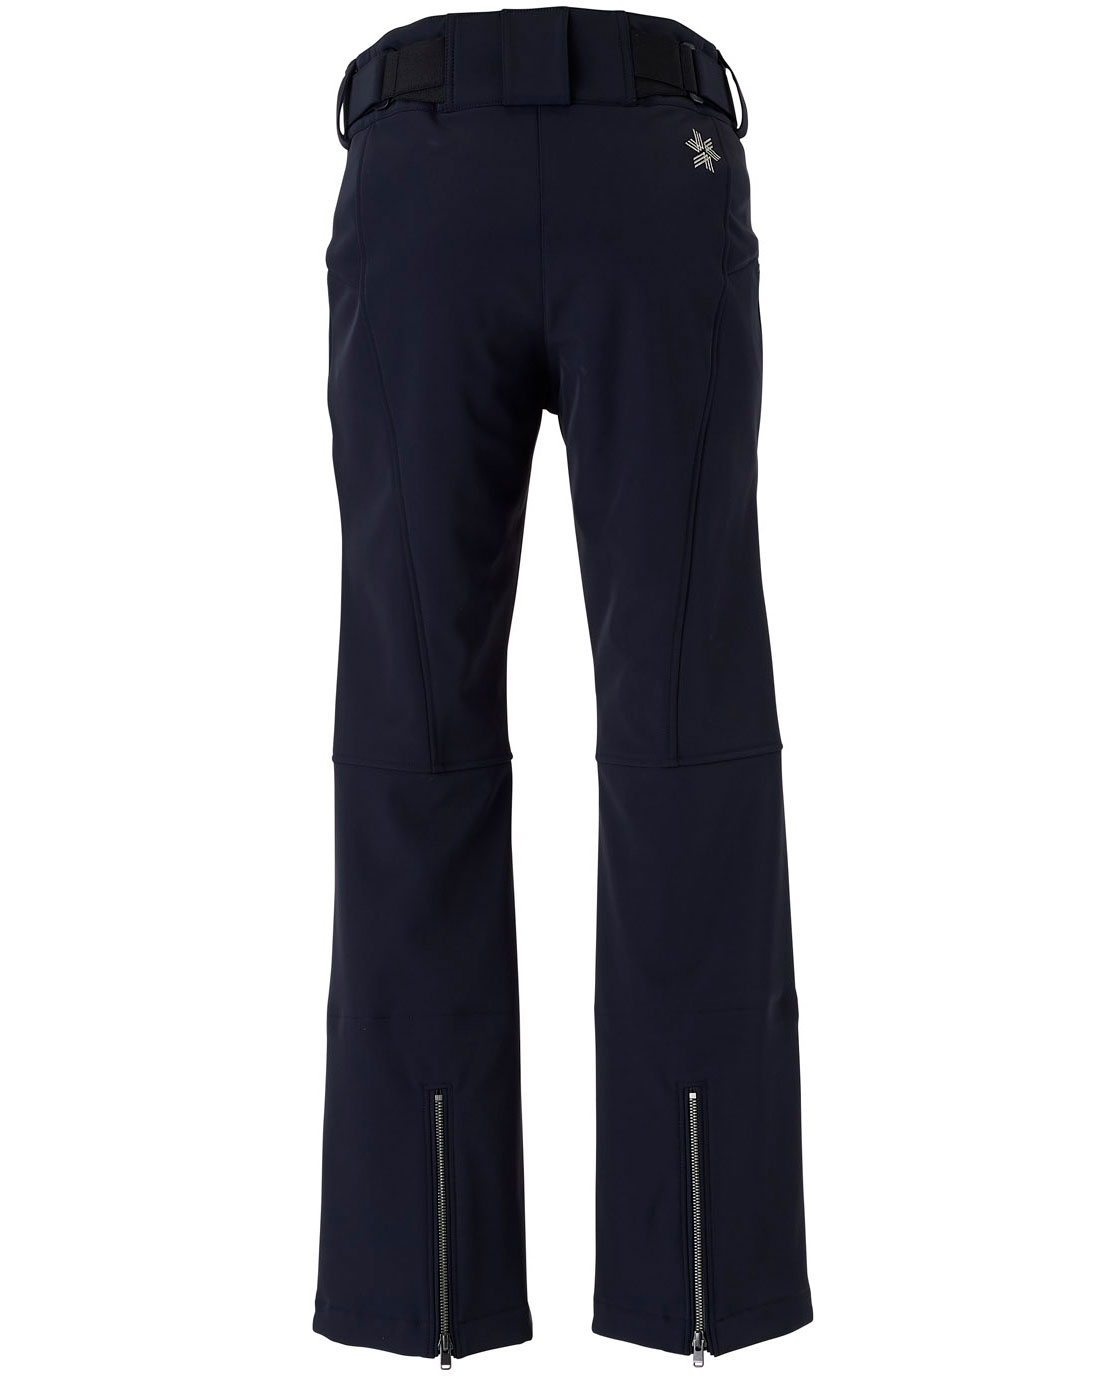 Goldwin Albireo Bonding Pants - Ski Pants - buy online at Sport Gardena